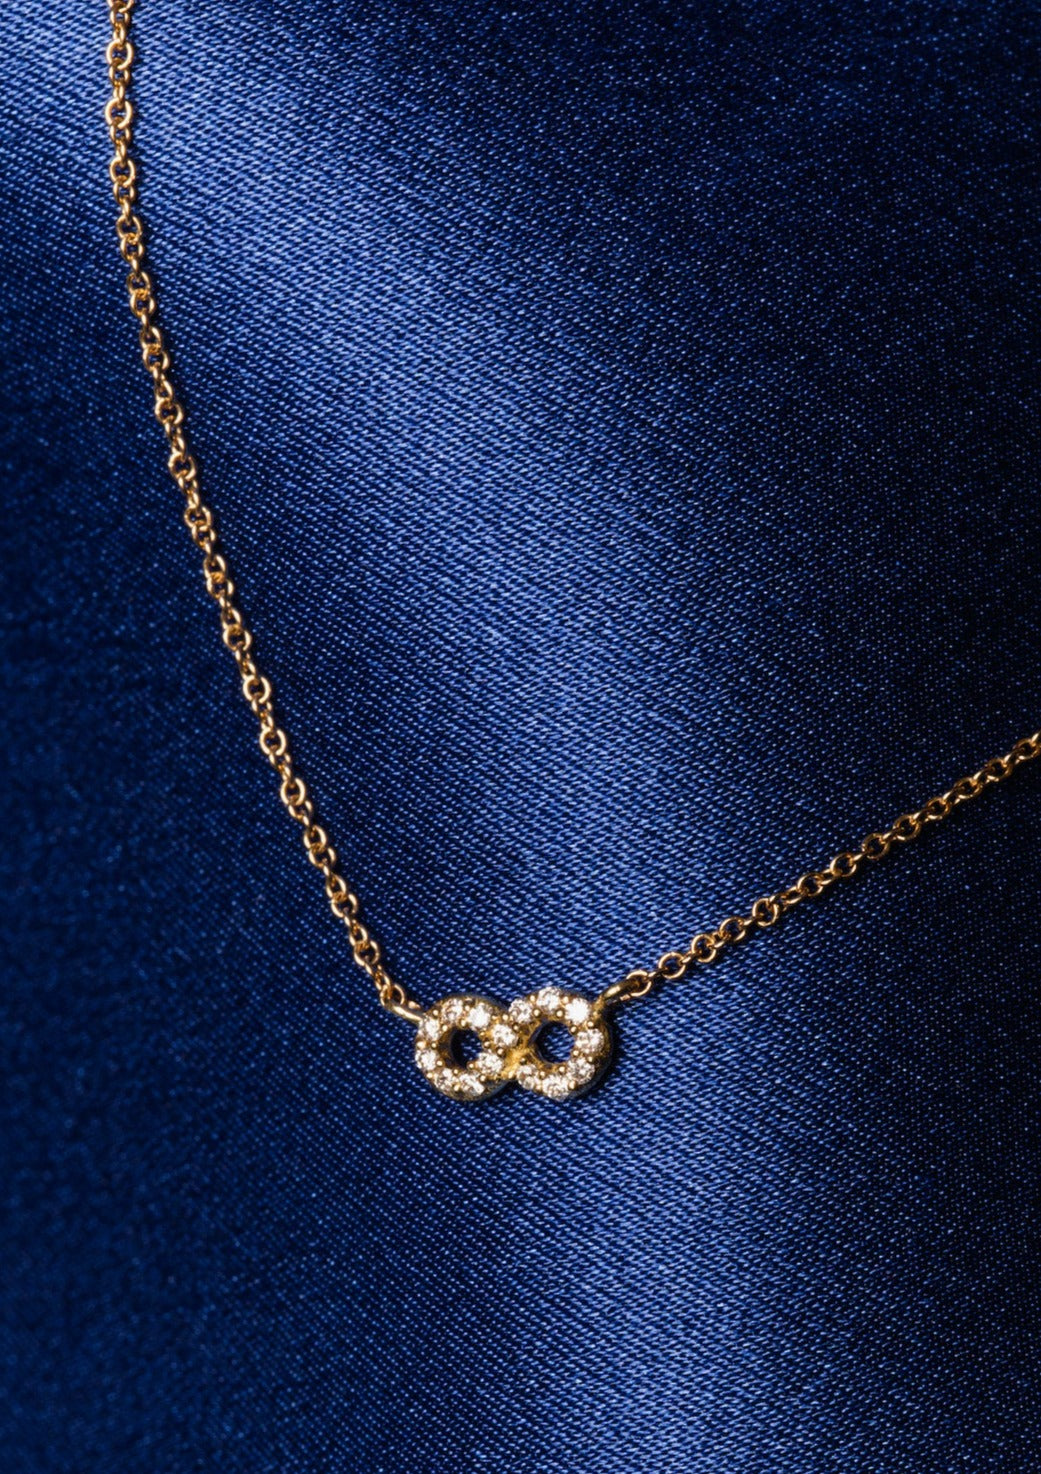 Matilda Eternity Diamond Necklace, 18k gold